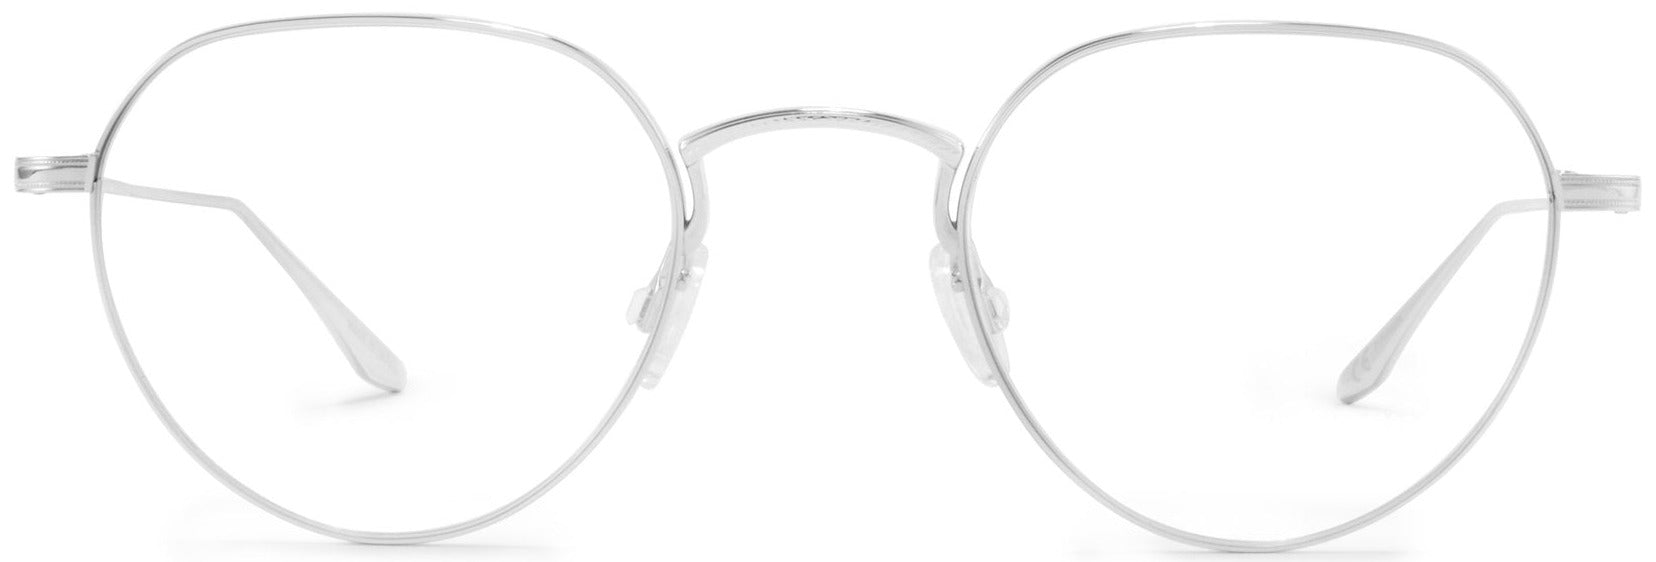 Alexander Daas - Barton Perreira Orlov Eyeglasses - Silver - Front View